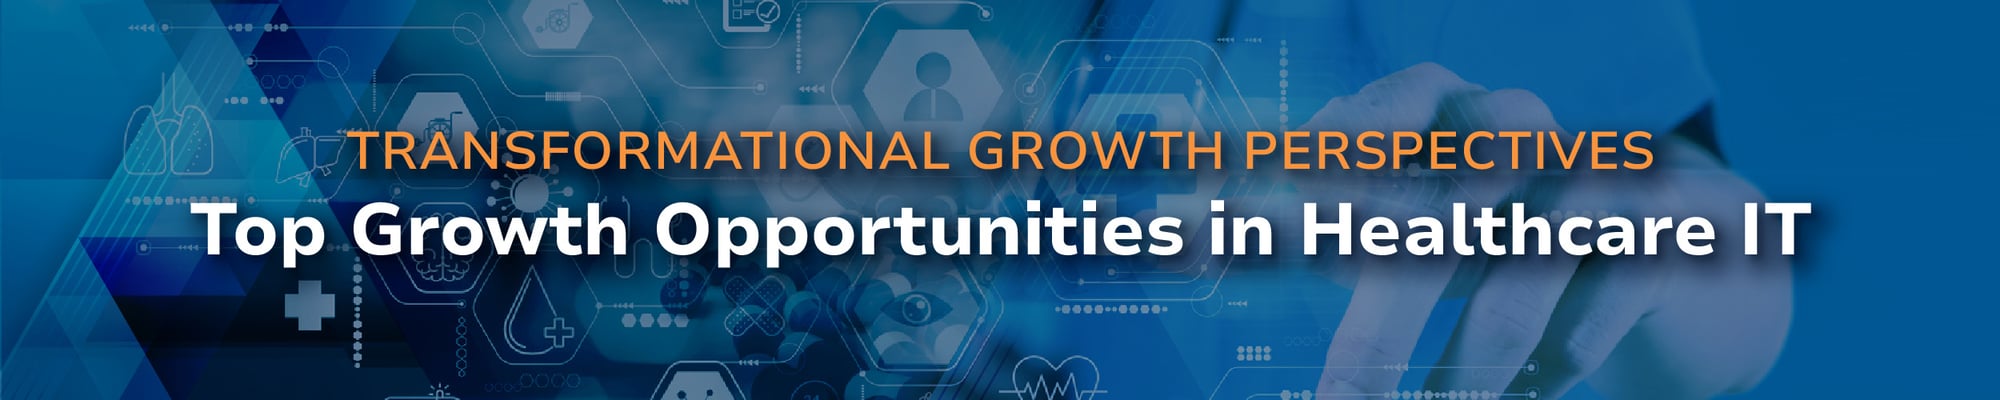 Top Growth Opportunities in Healthcare IT